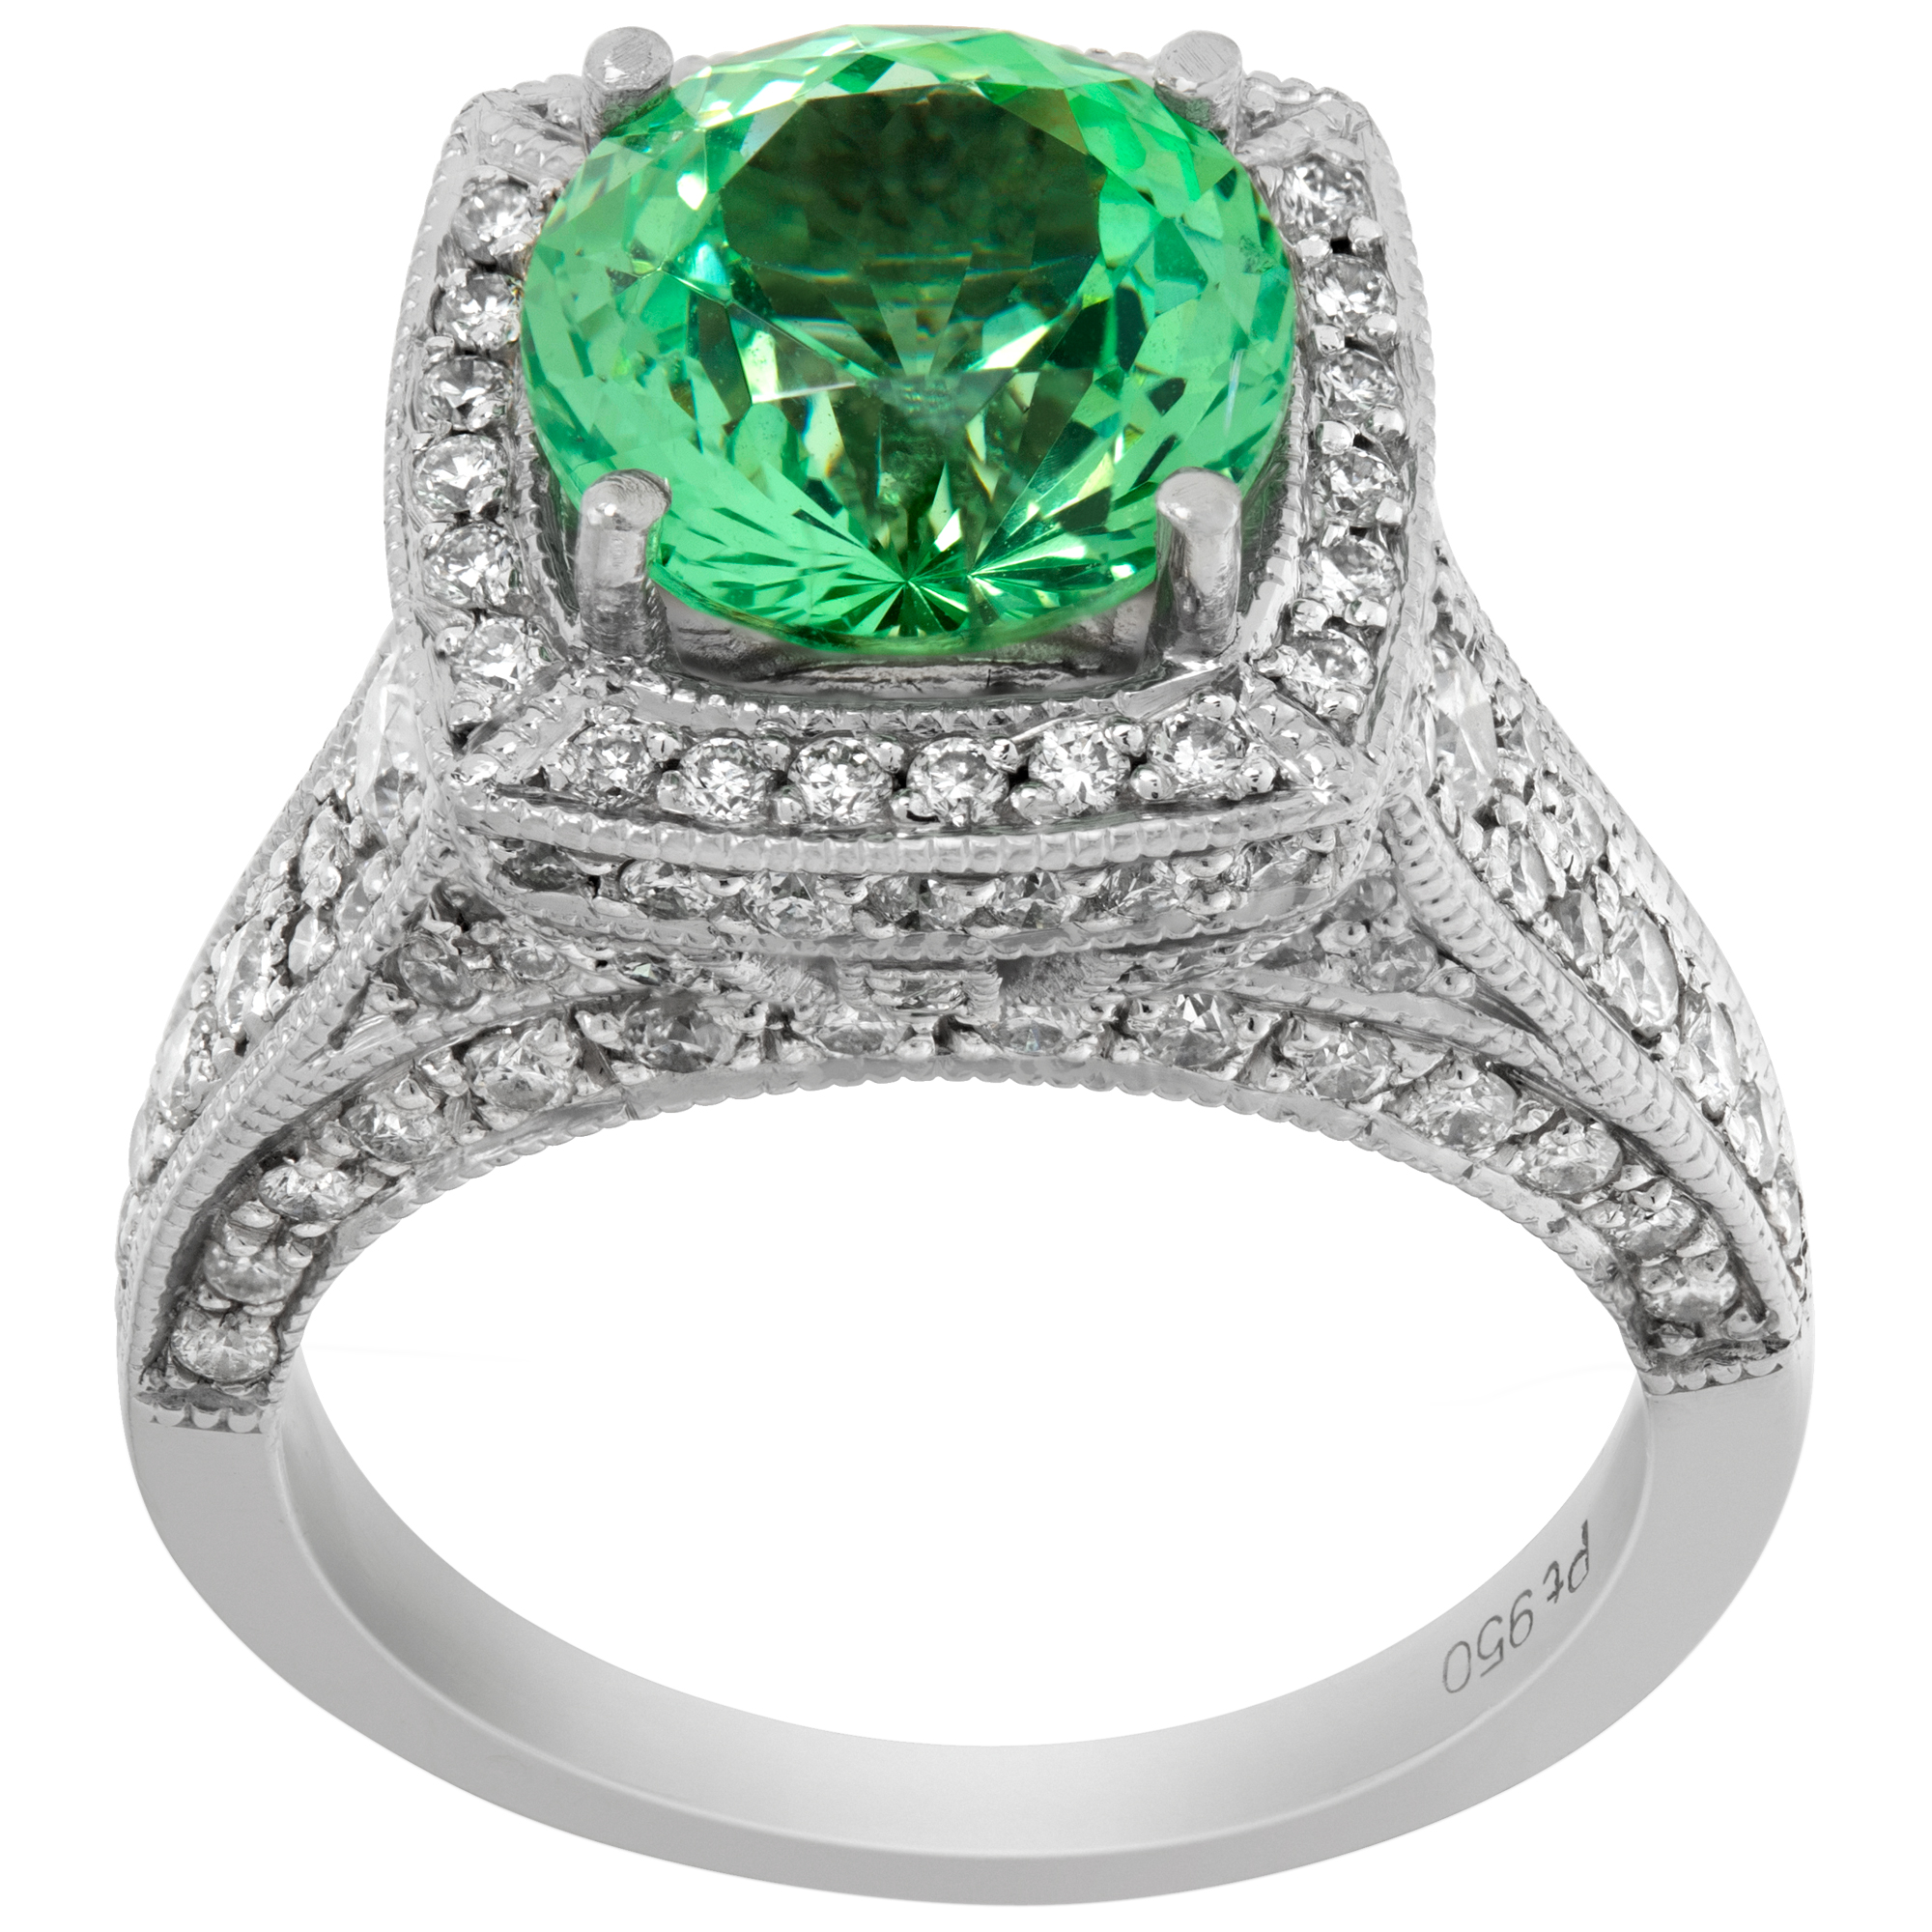 Green garnet ring in platinum with accent round brilliant cut diamonds